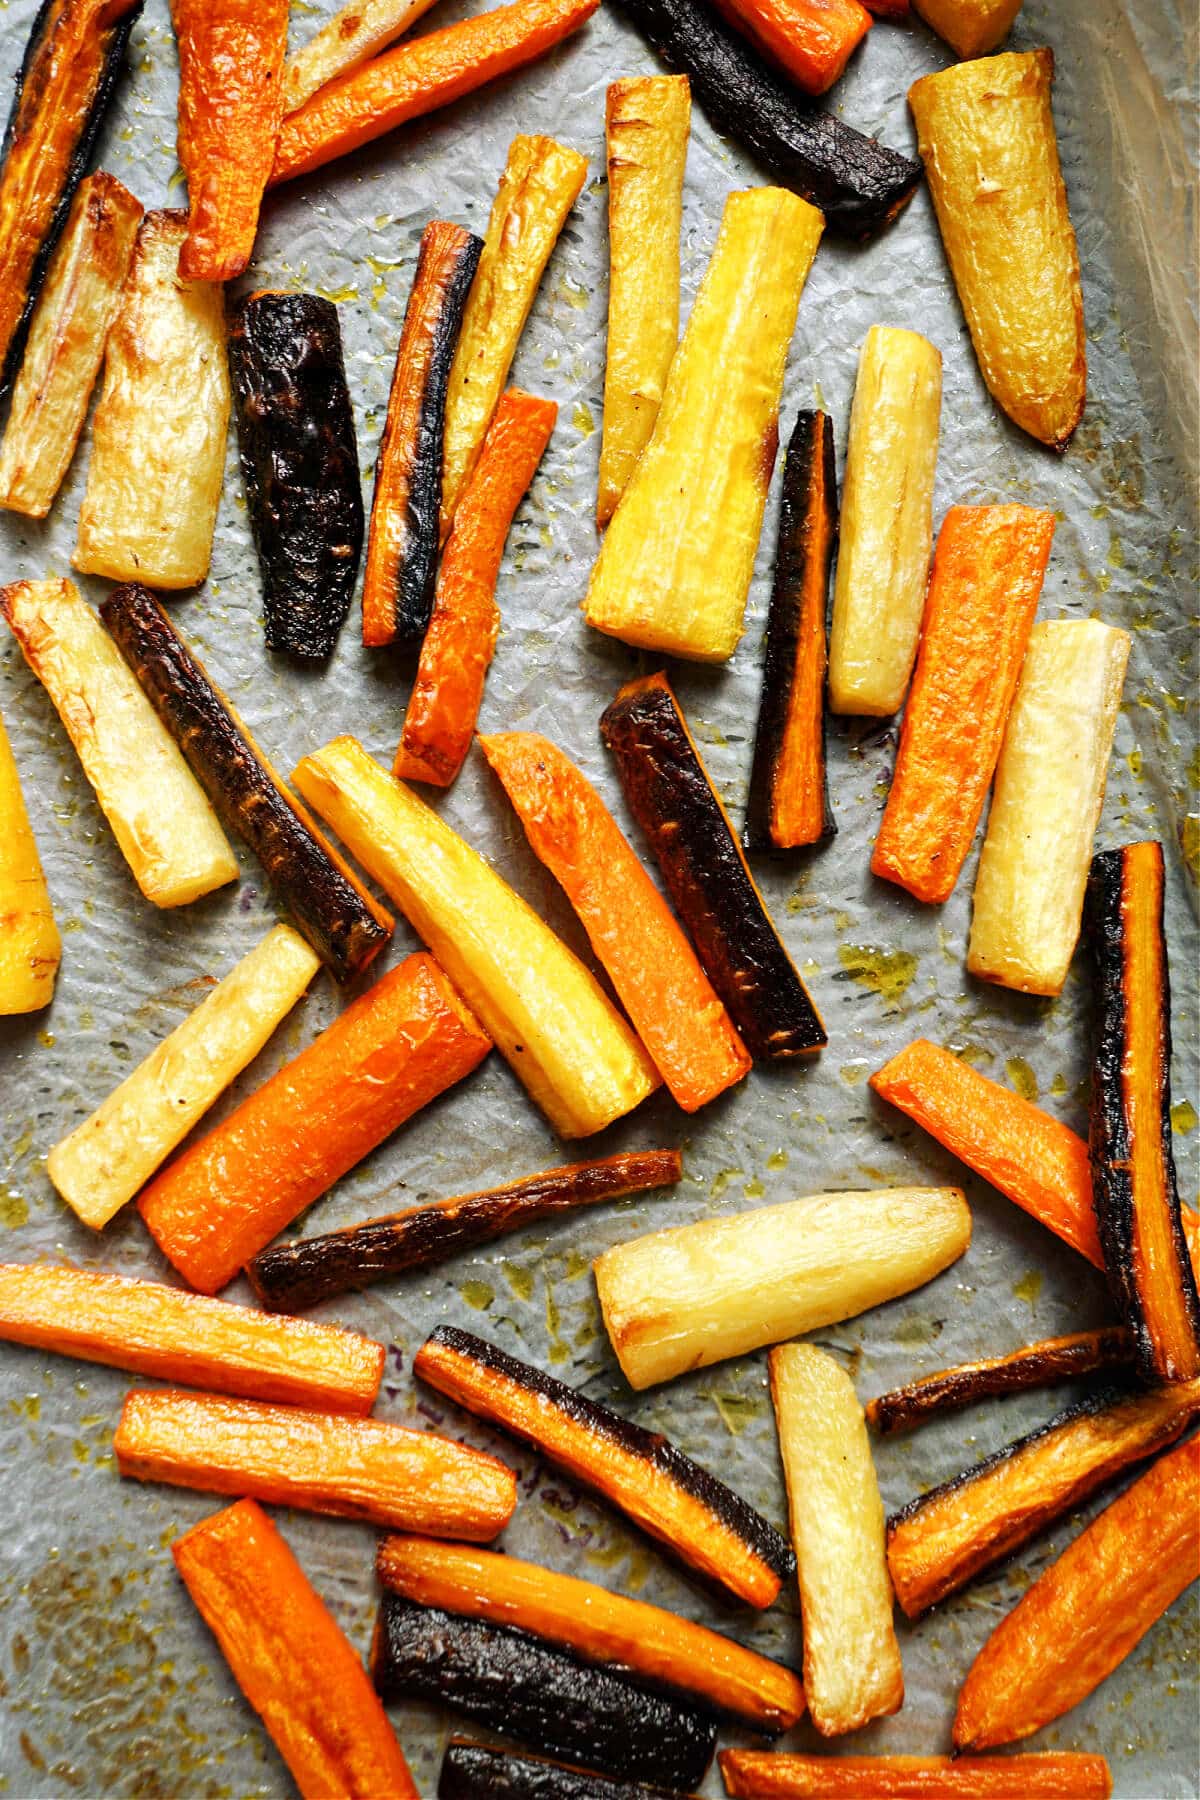 A roasting tray with roasted rainbow carrots.